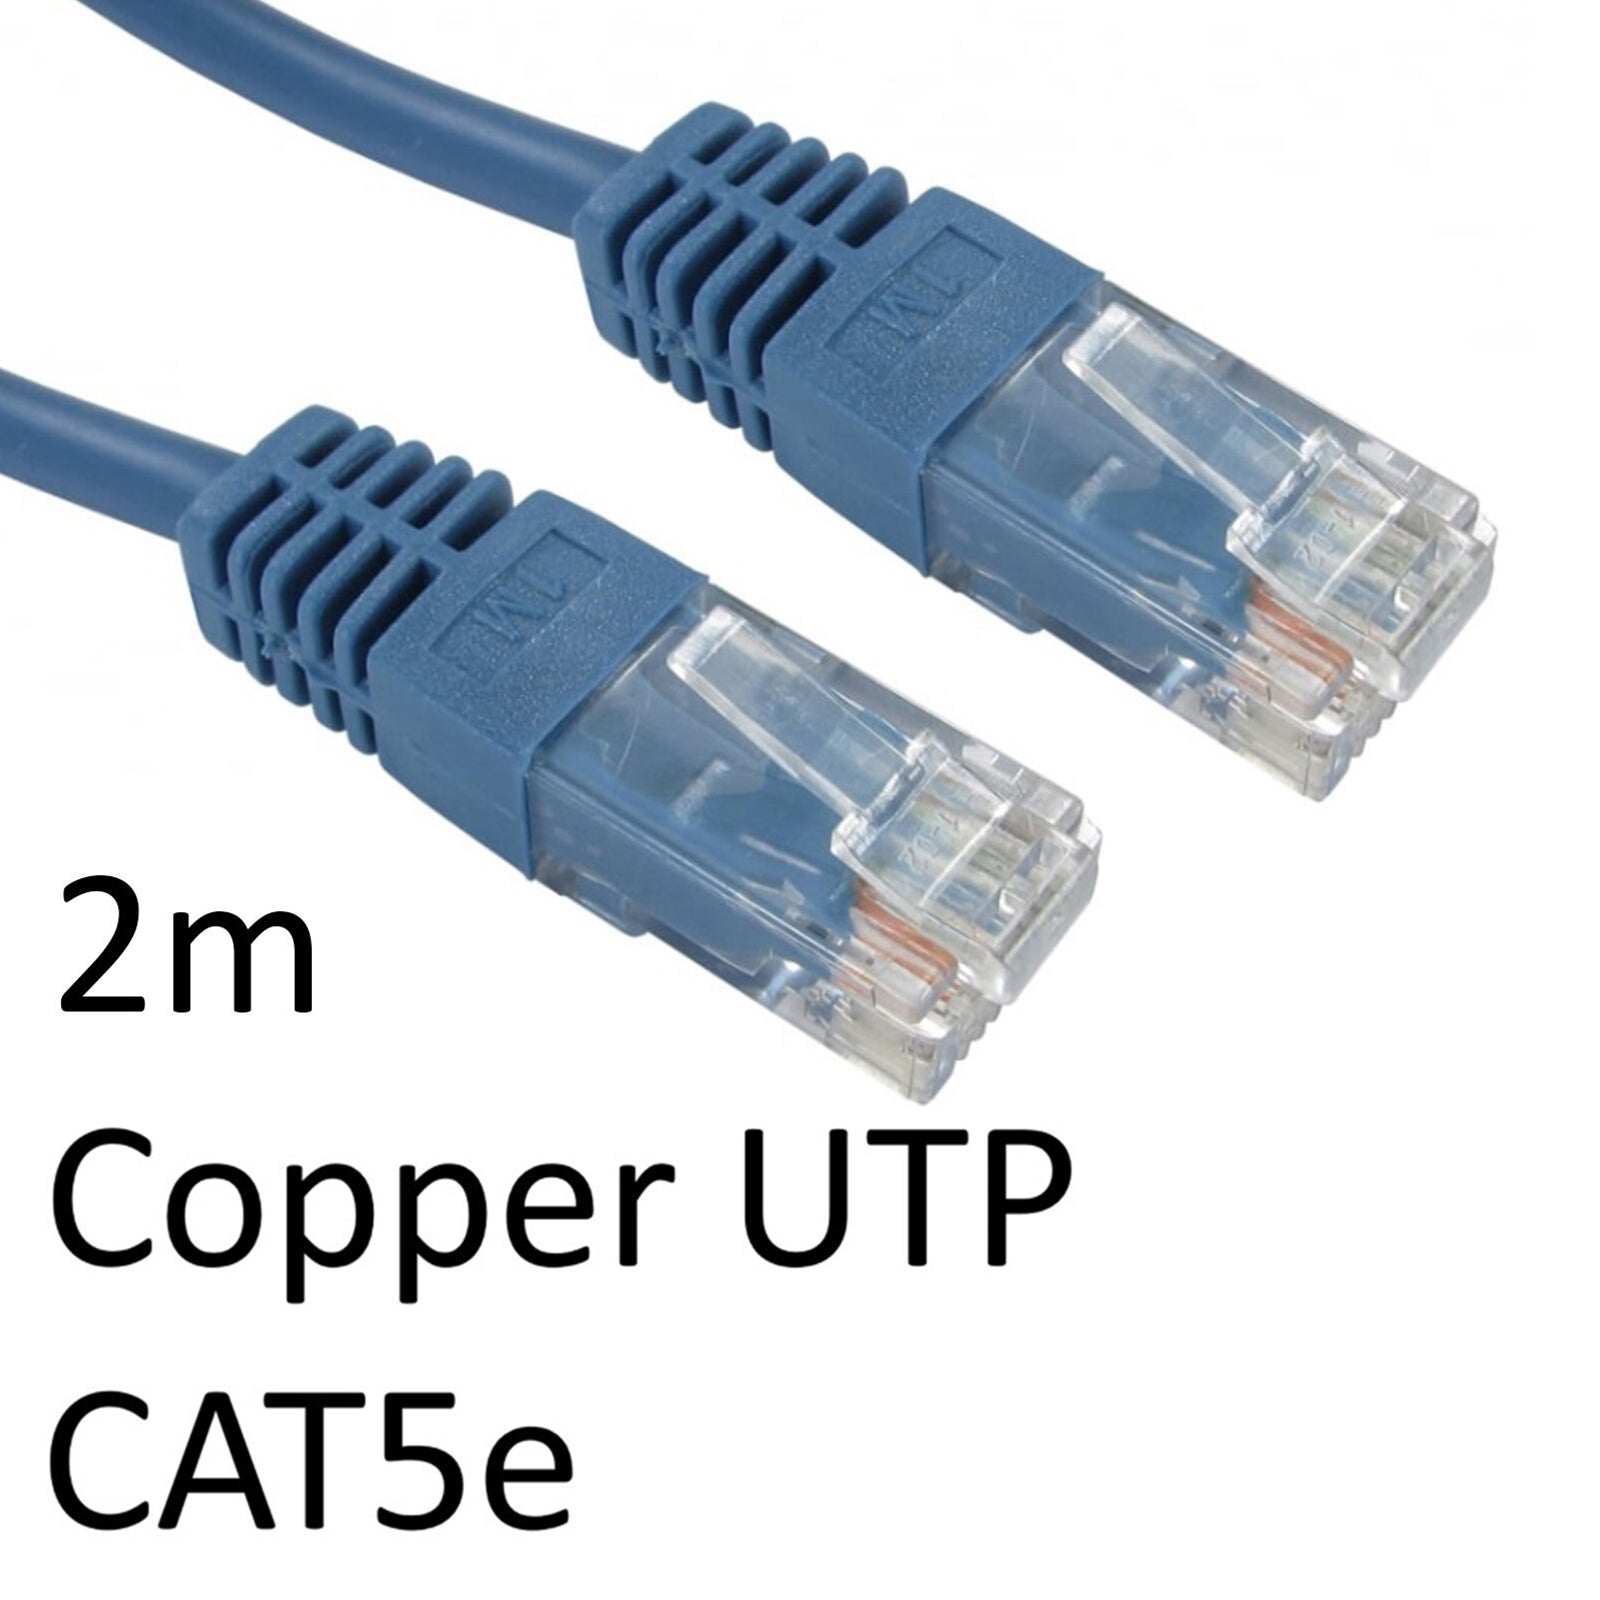 RJ45 (M) to RJ45 (M) CAT5e 2m Blue OEM Moulded Boot Copper UTP Network Cable